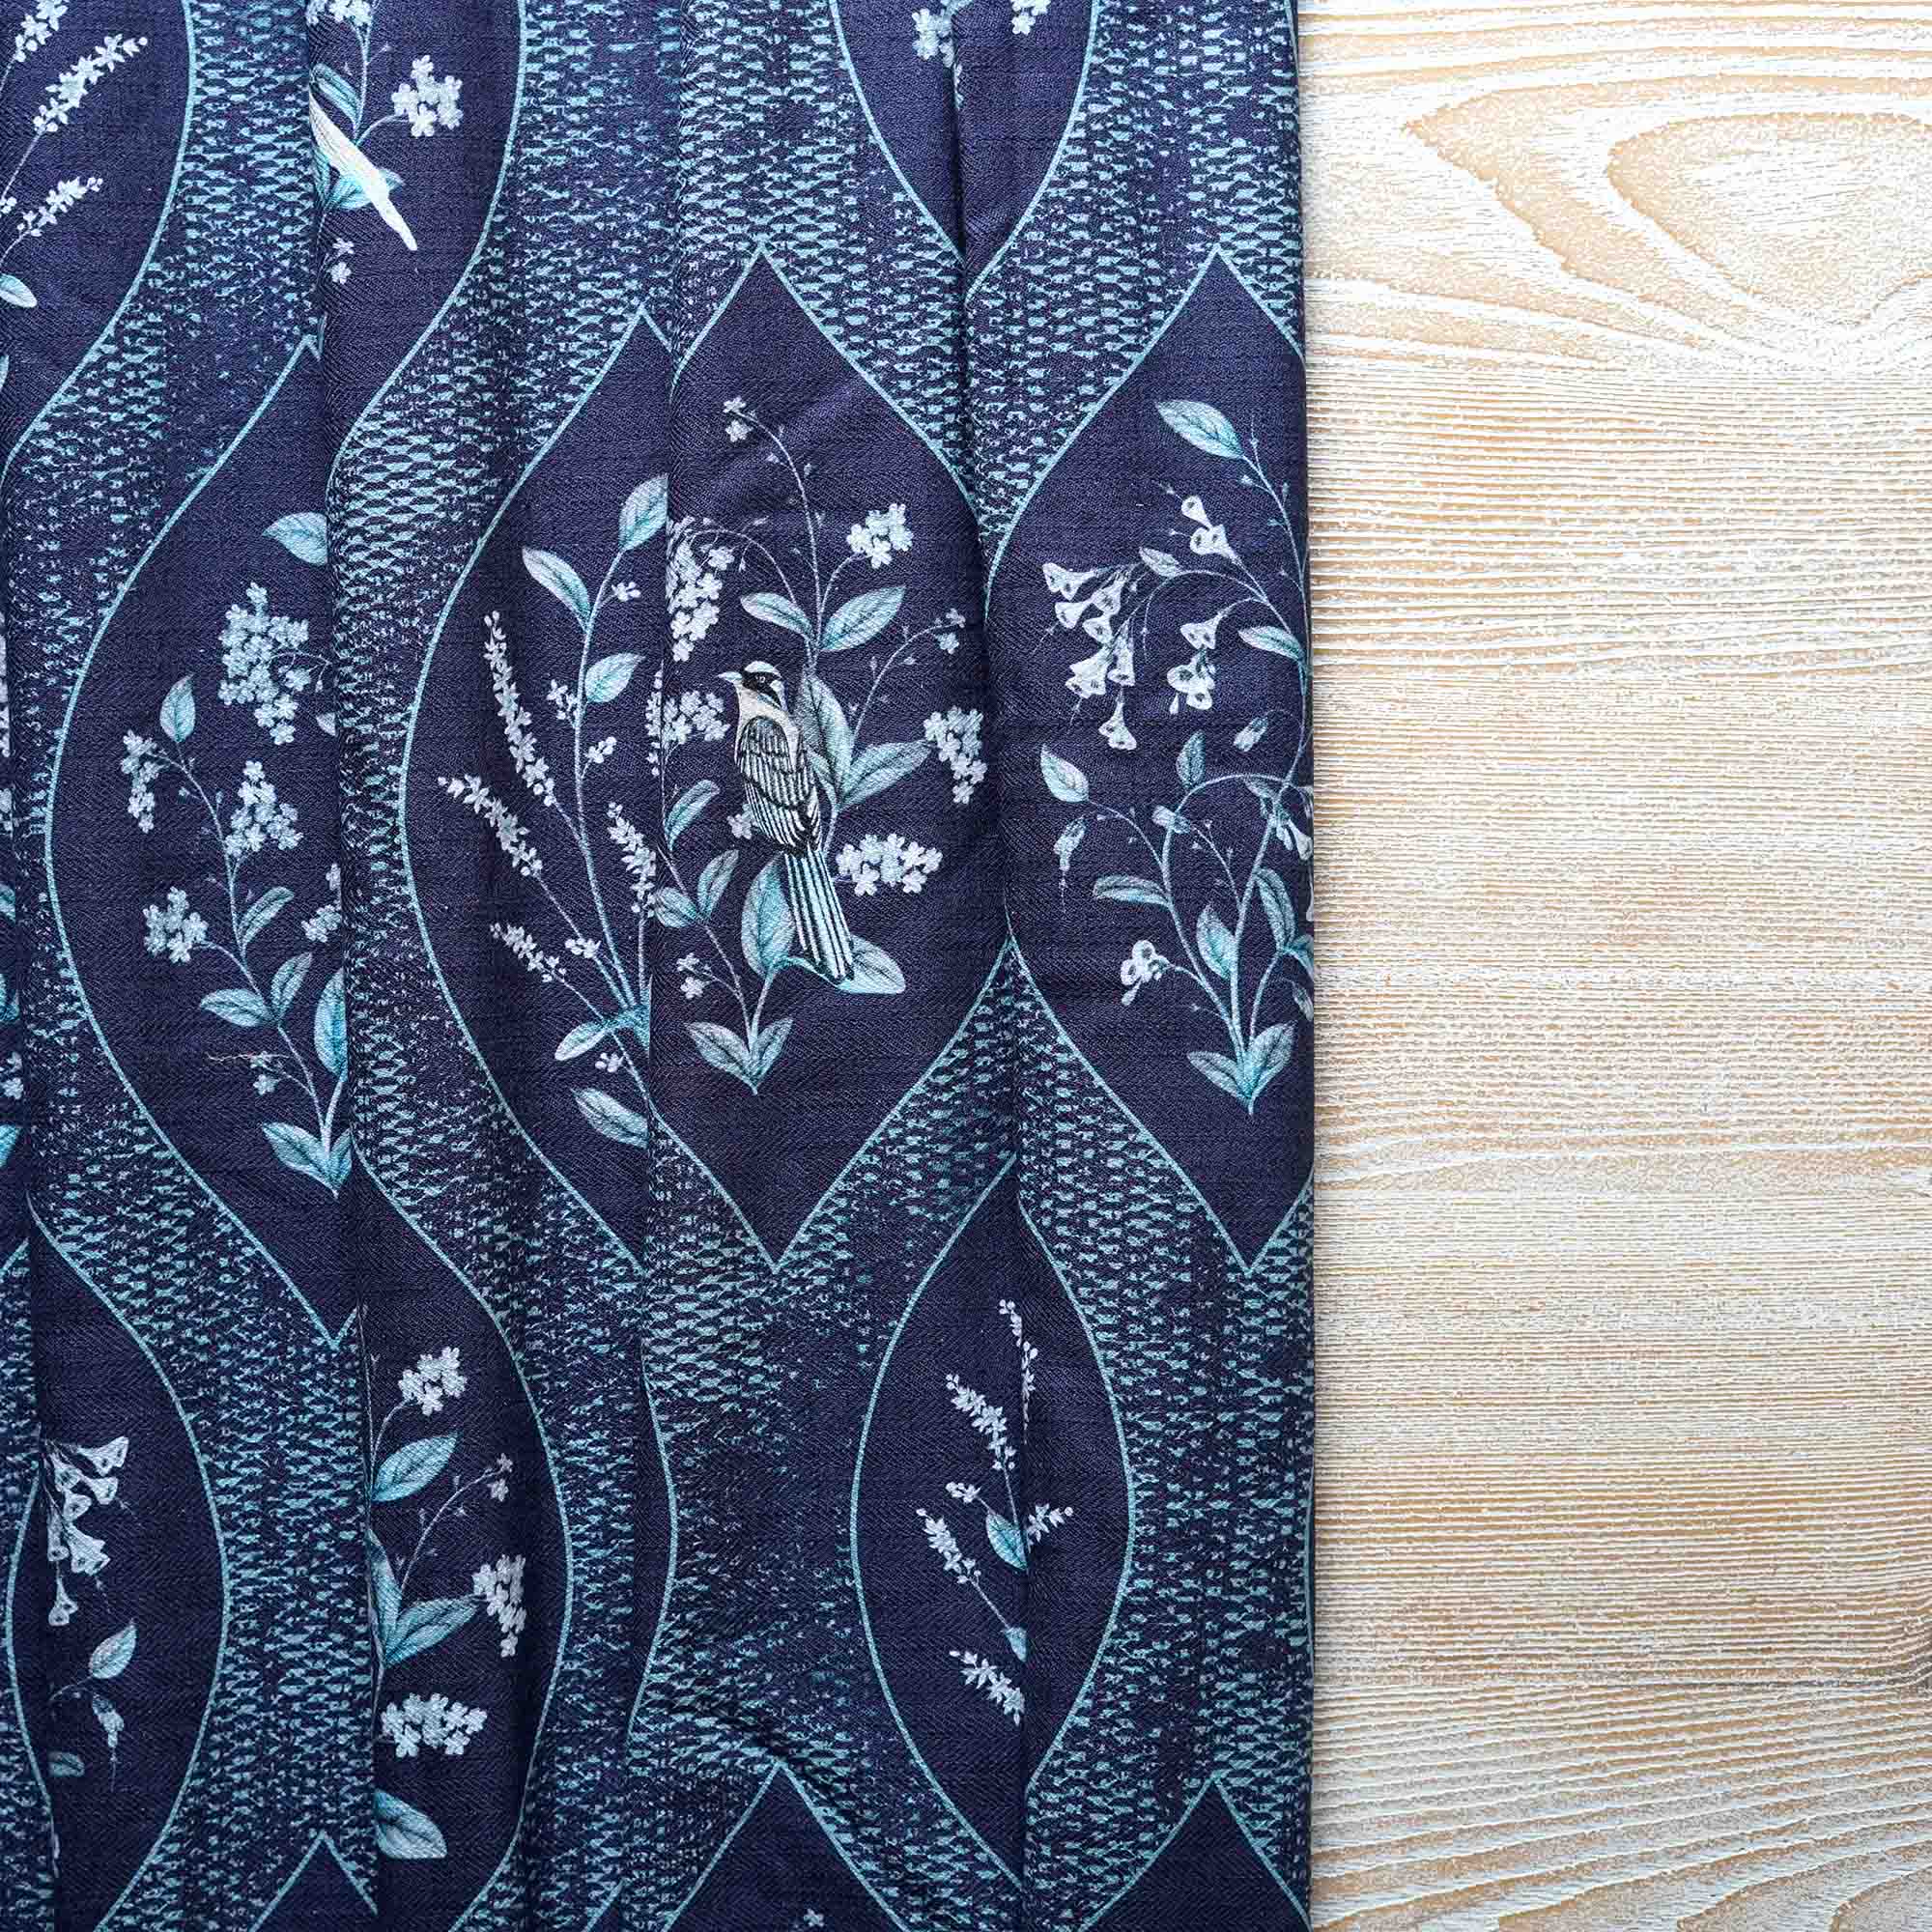 A Persian Corridor Winter Cotton Linen Blend Fabric